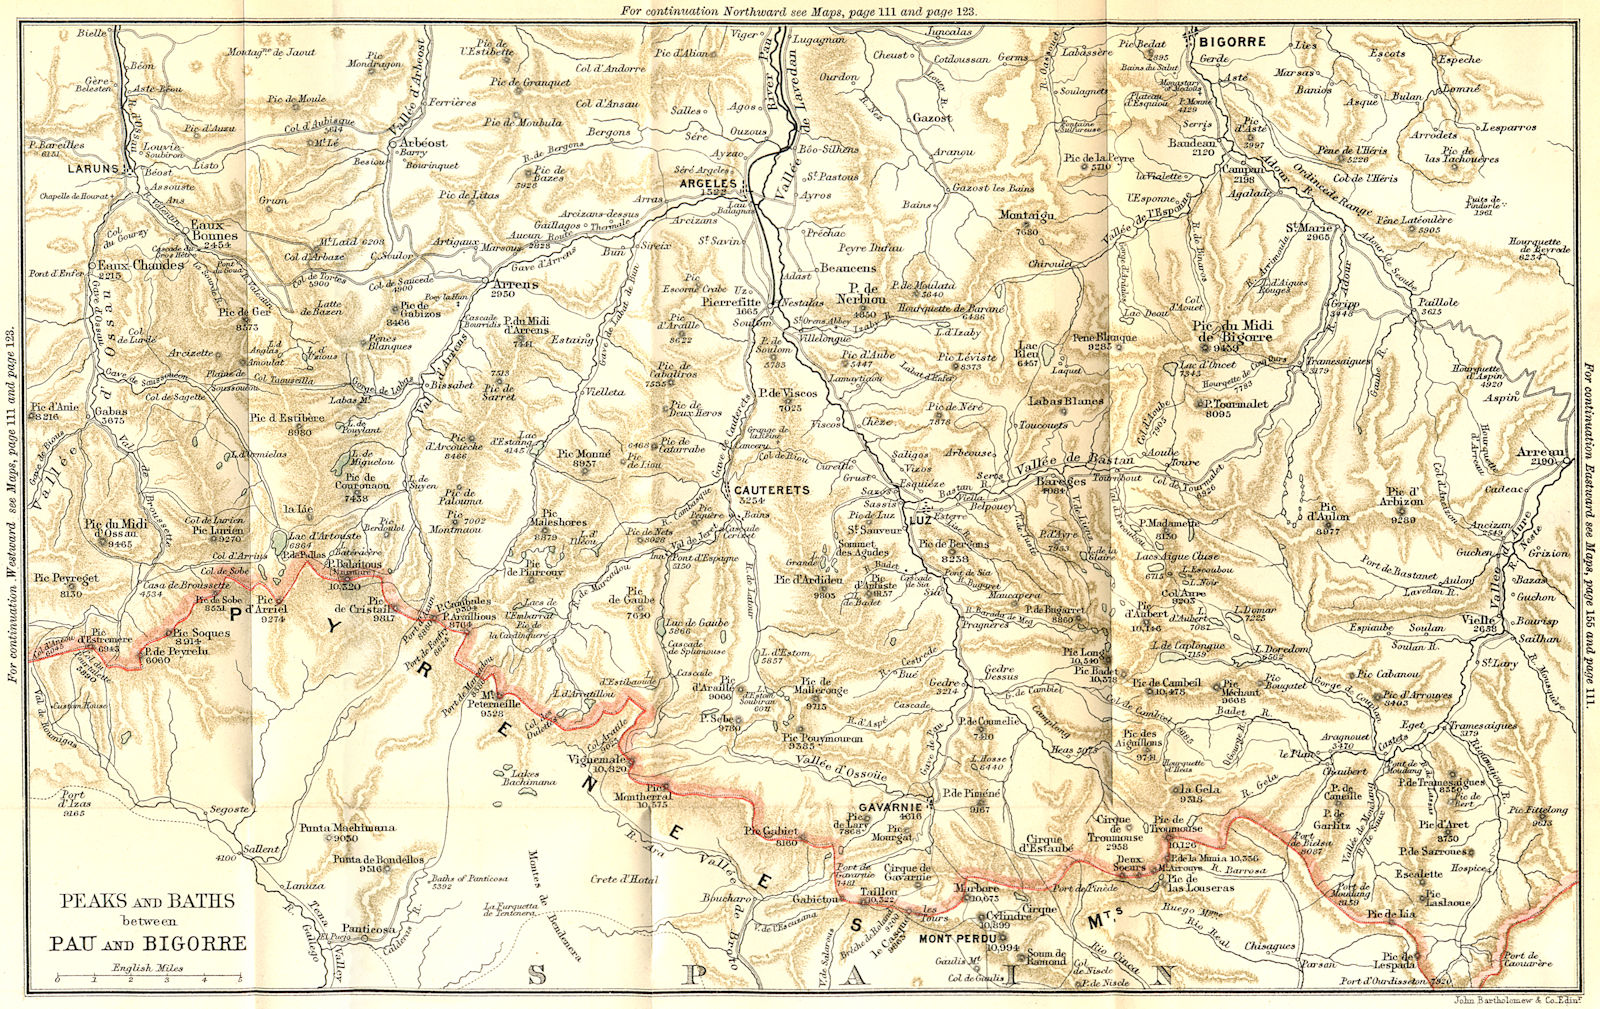 PYRÉNÉES-ATLANTIQUES. Western. Peaks & Baths between Pau & Bigorre 1889 map